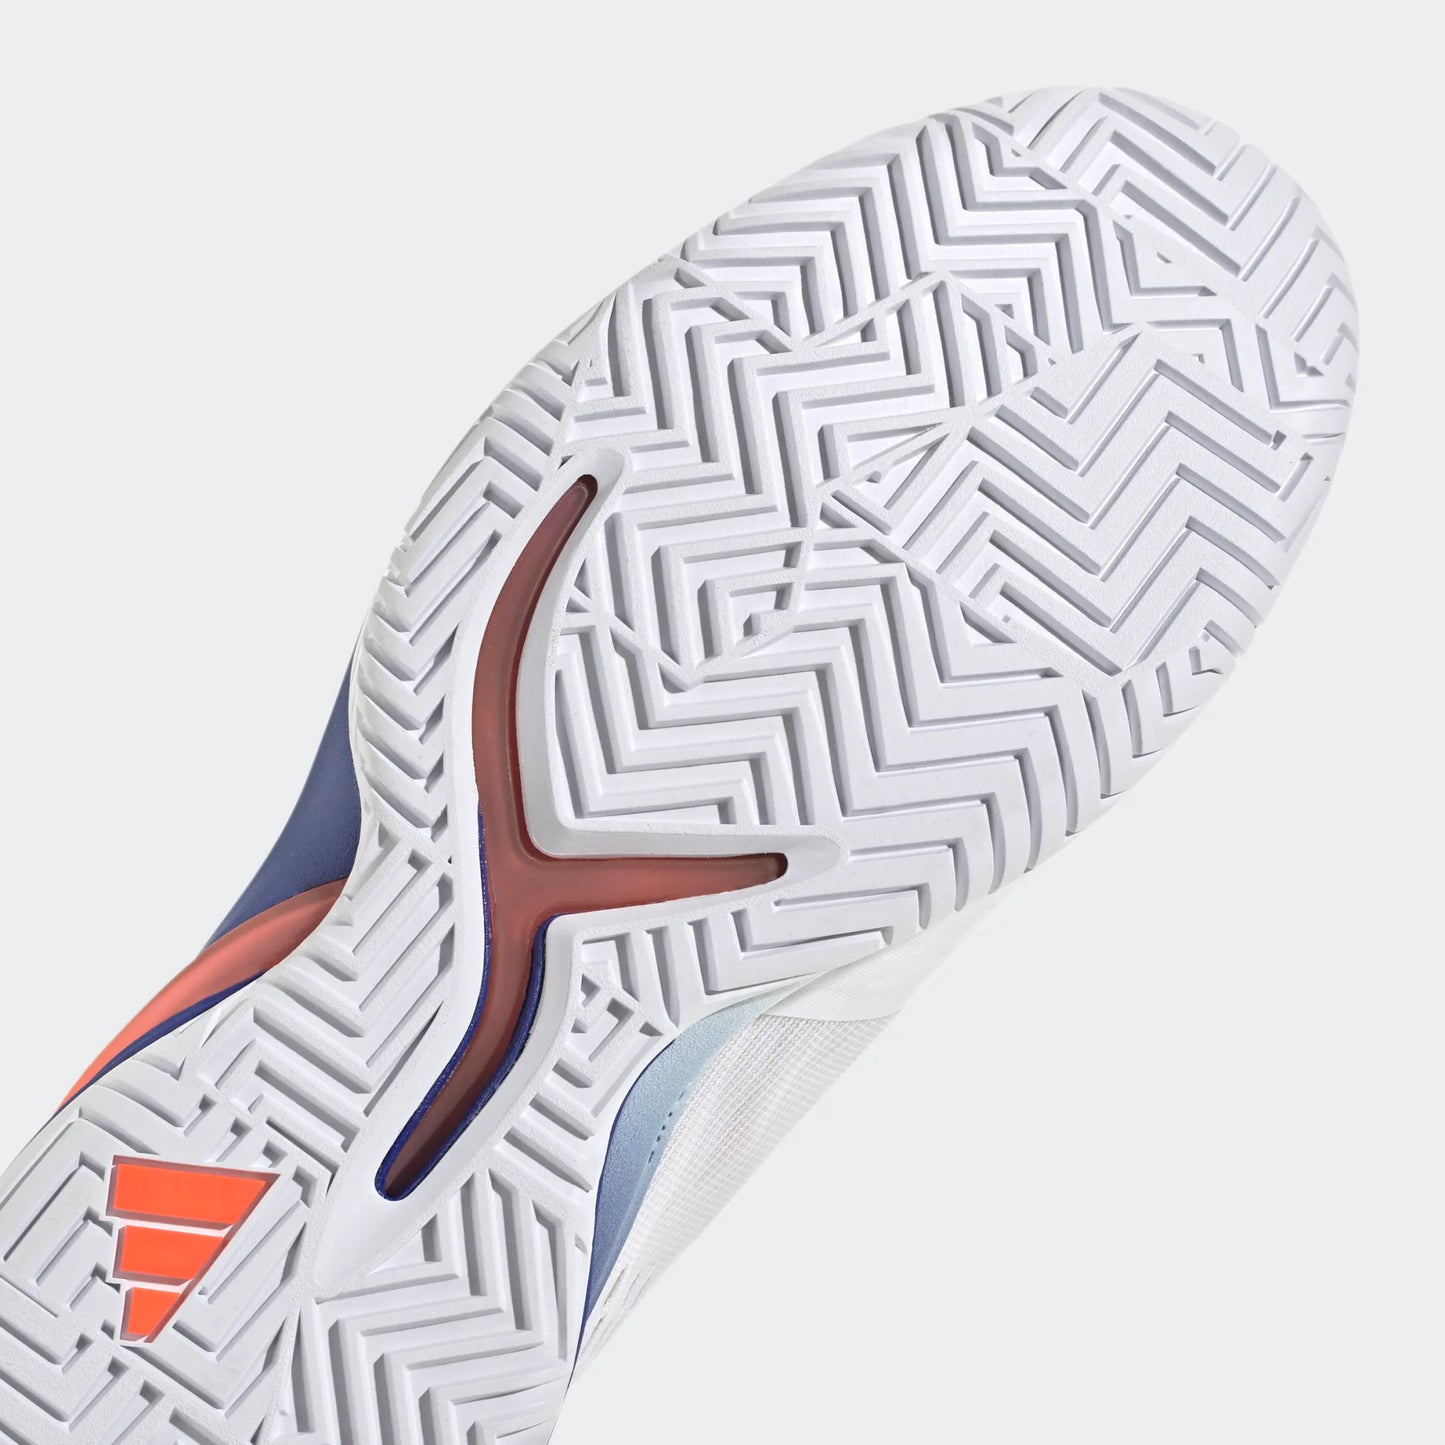 adidas Adizero Cybersonic men tennis shoes - White/Blue/Red GY9634